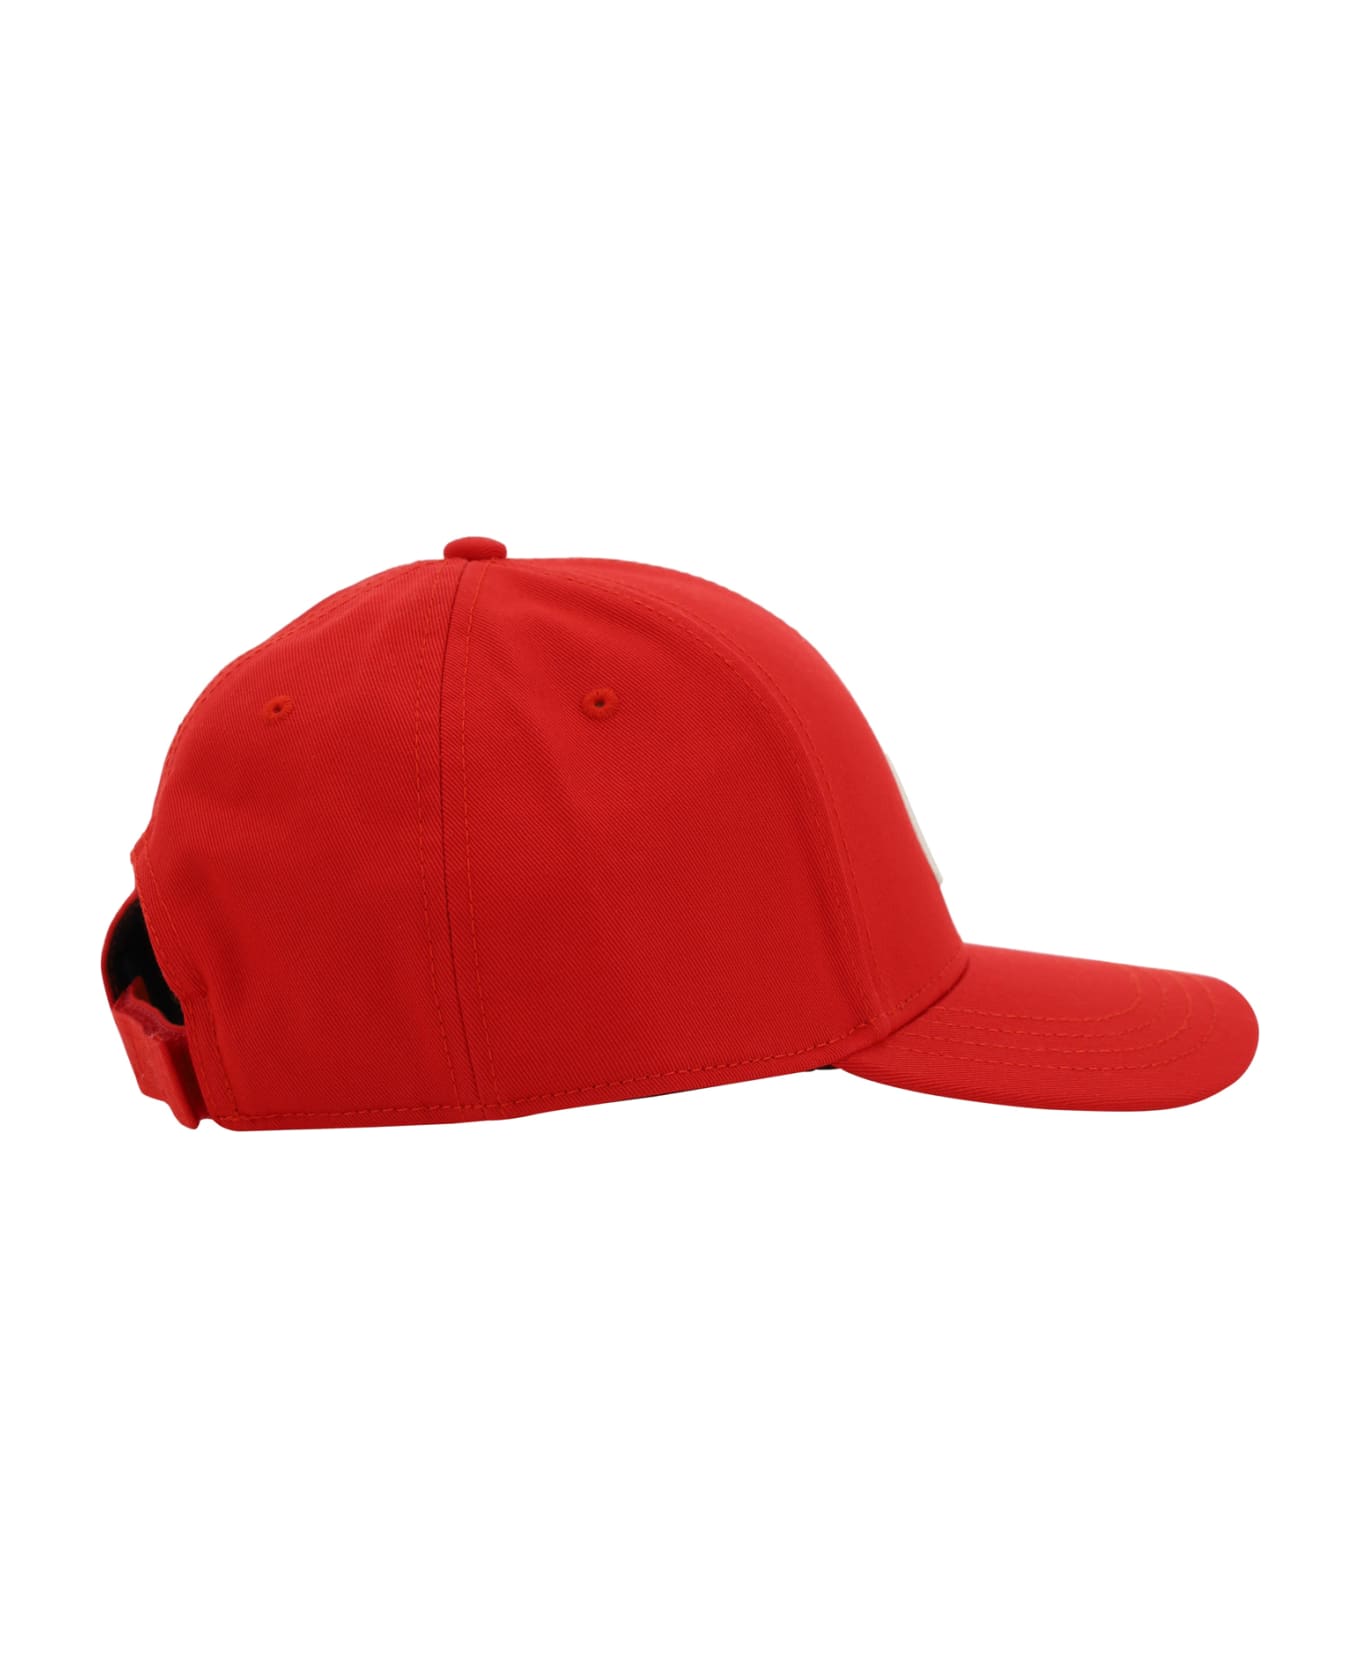 Autry Baseball Hat - Red 帽子